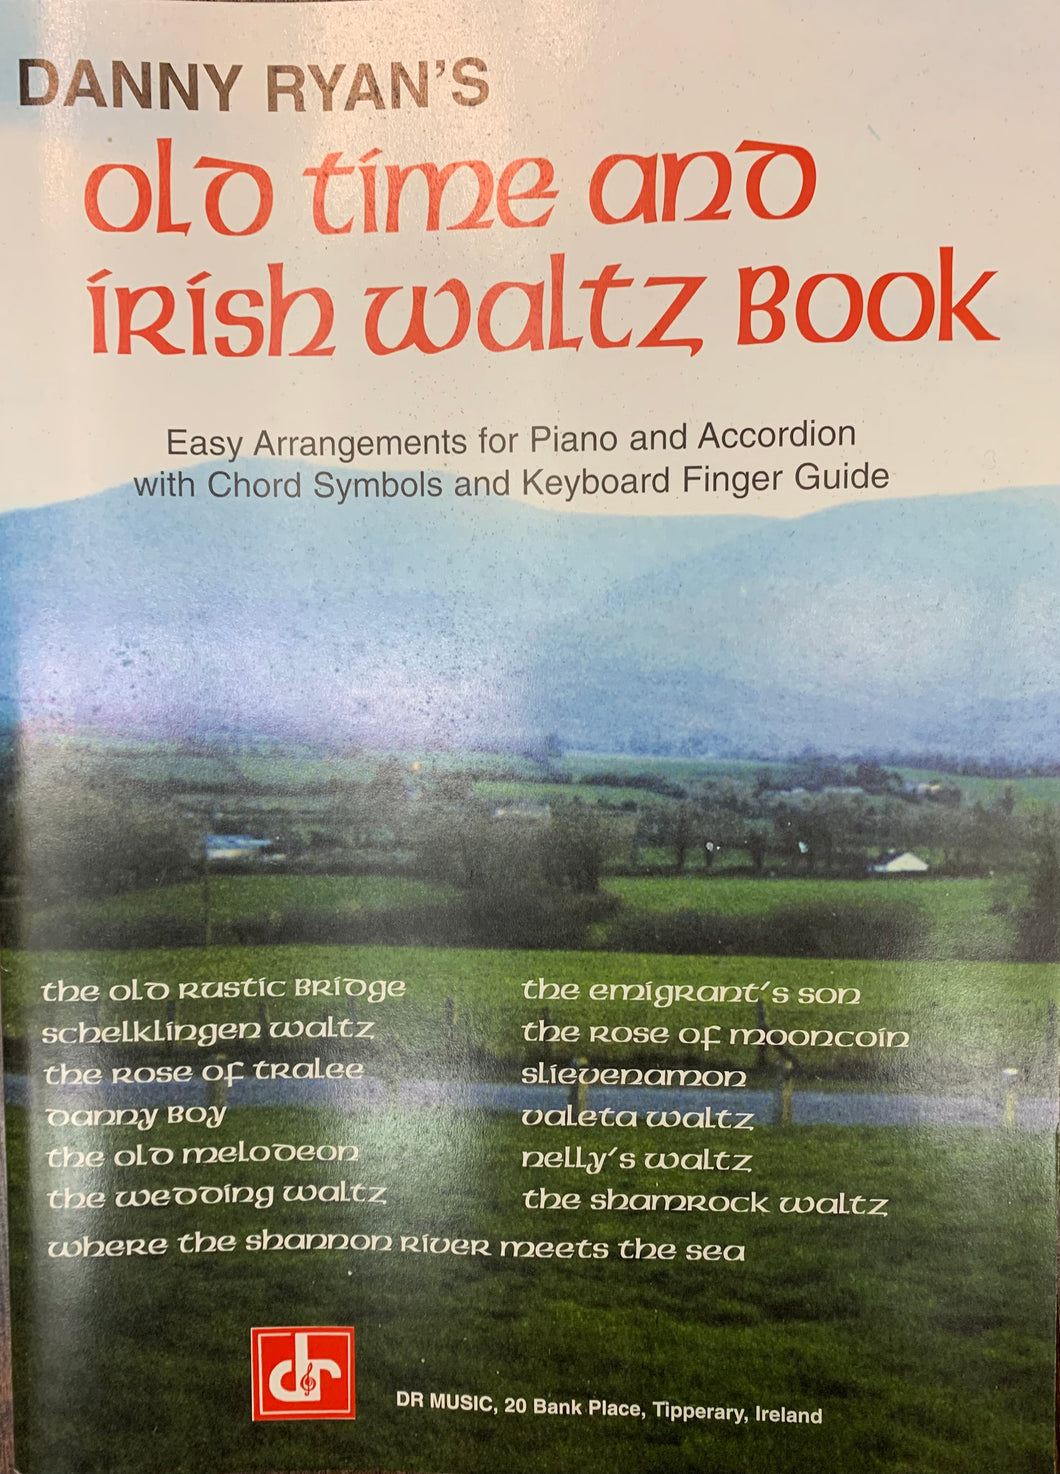 Piano Accordion Music Book Old Time and Irish Waltz Book